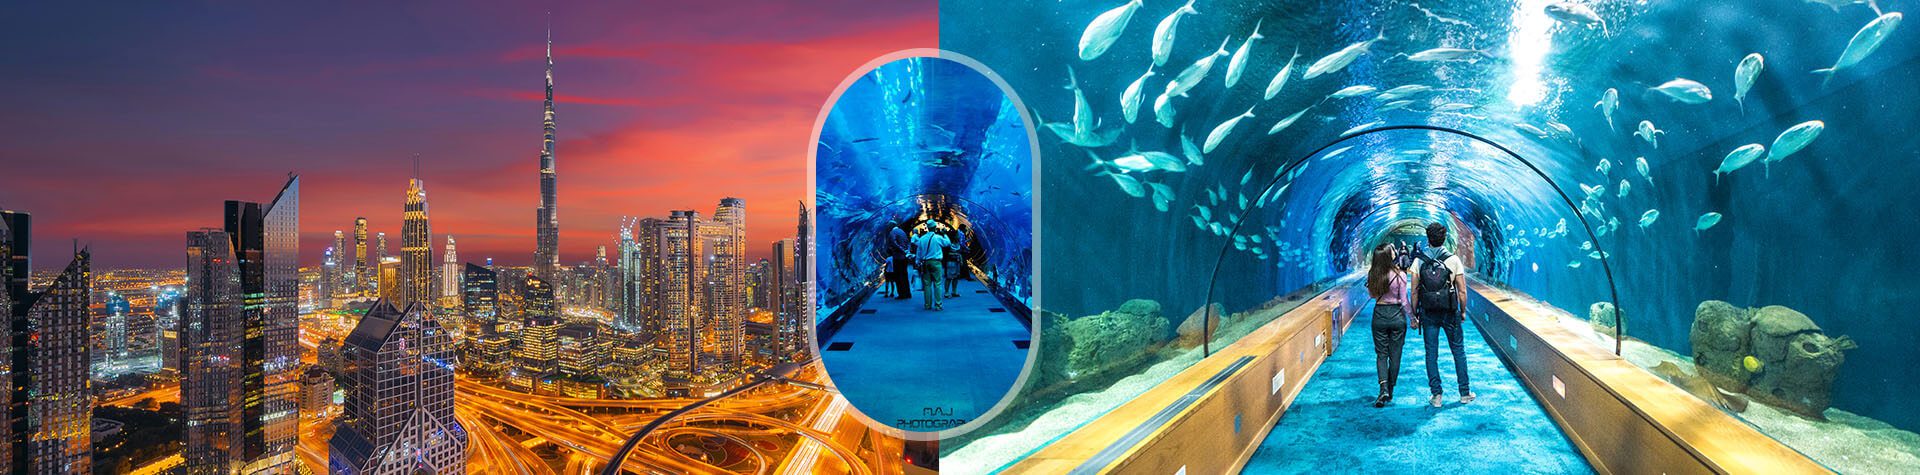 Burj Khalifa and Dubai Aquarium tickets